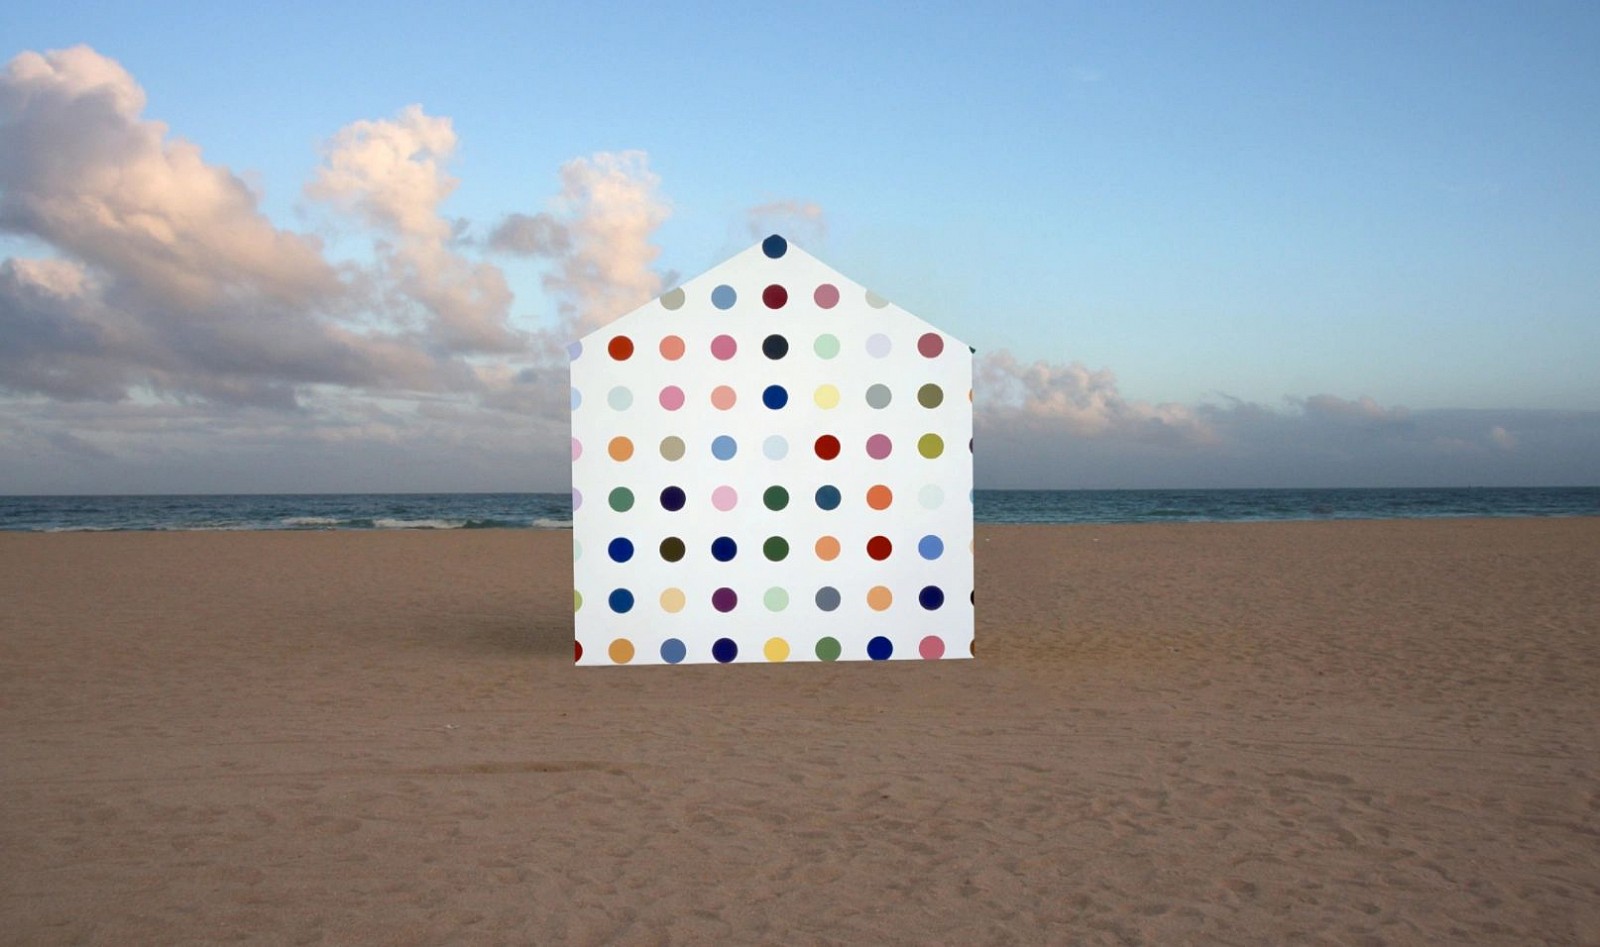 Max-Steven Grossman, Z Seascape series (Polka Dots), edition of 5 + 2 AP, 2013
satin print, 30 x 50 in., 40 x 65 in., 50 x 80 in.
GROSS00516